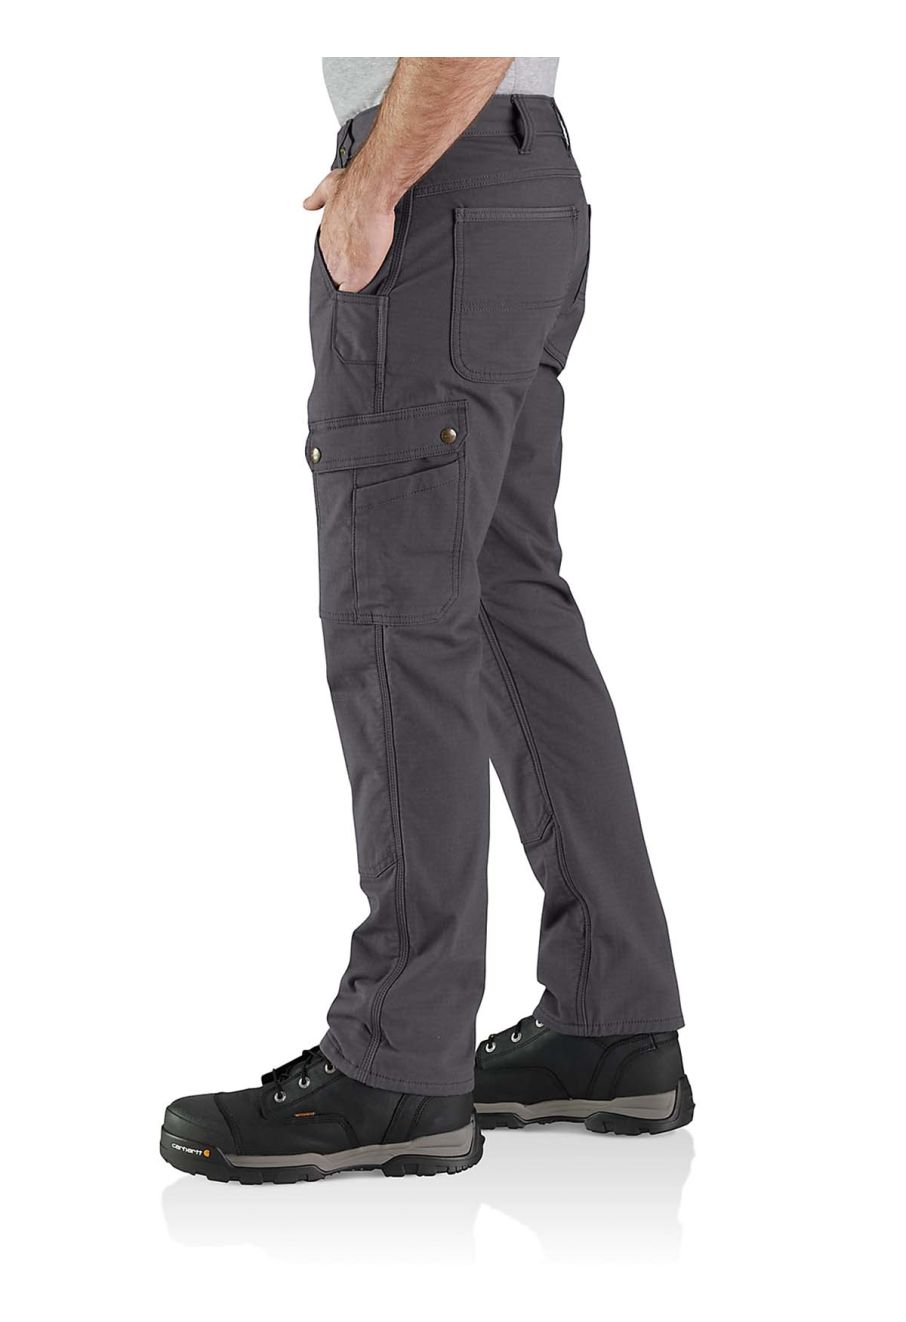  Carhartt Fleece Lined Pants - Uniforms, Work & Safety